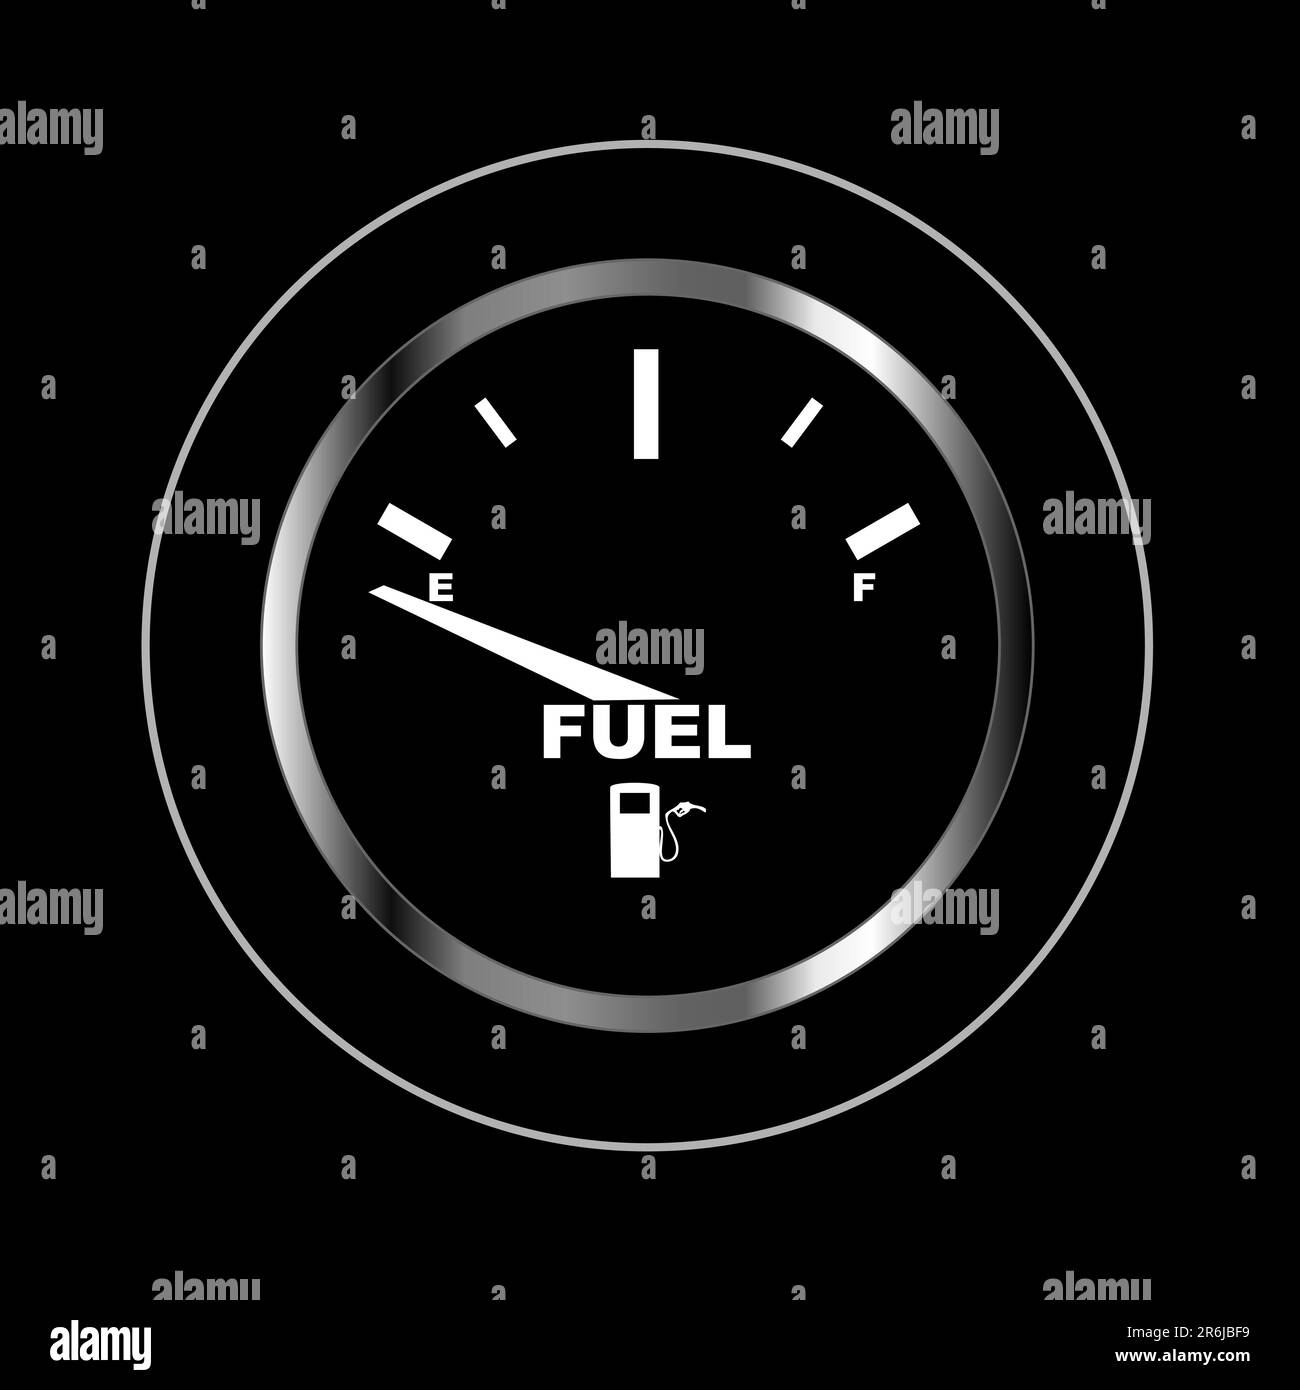 Vector image of a fuel gauge, shows empty. Stock Vector